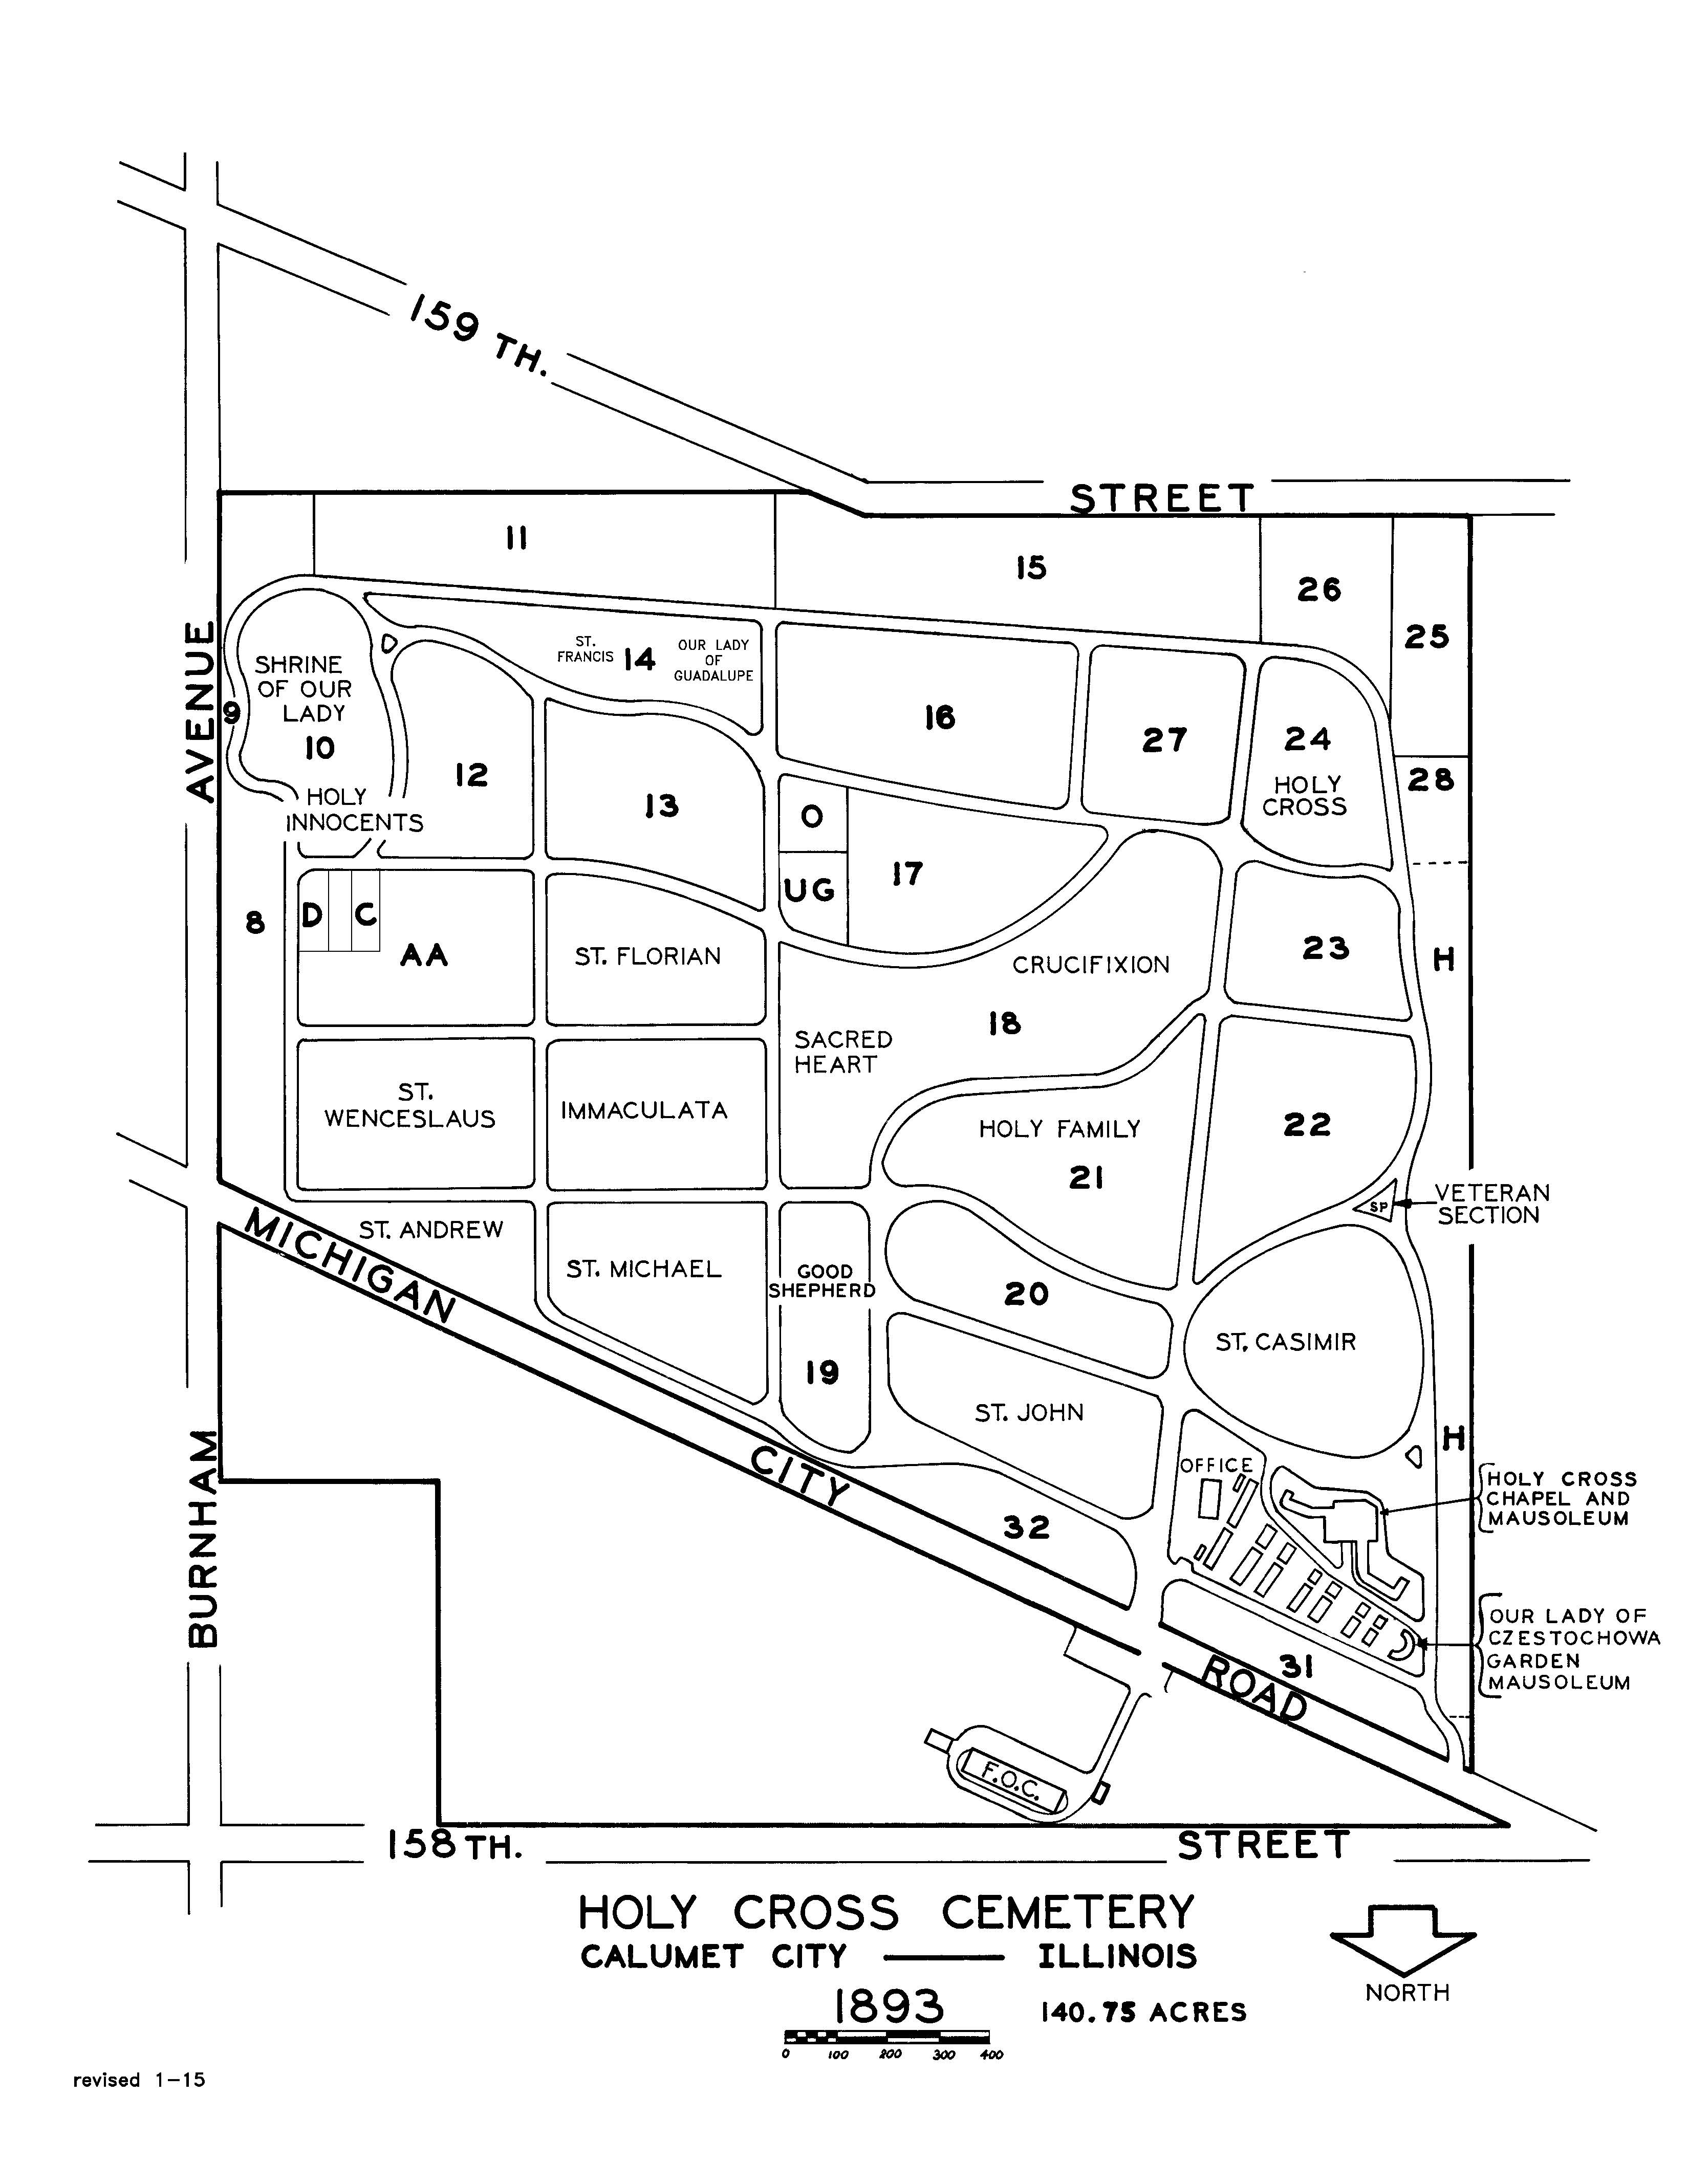 Map of Holy Cross Cemetery Calumet City Illinois